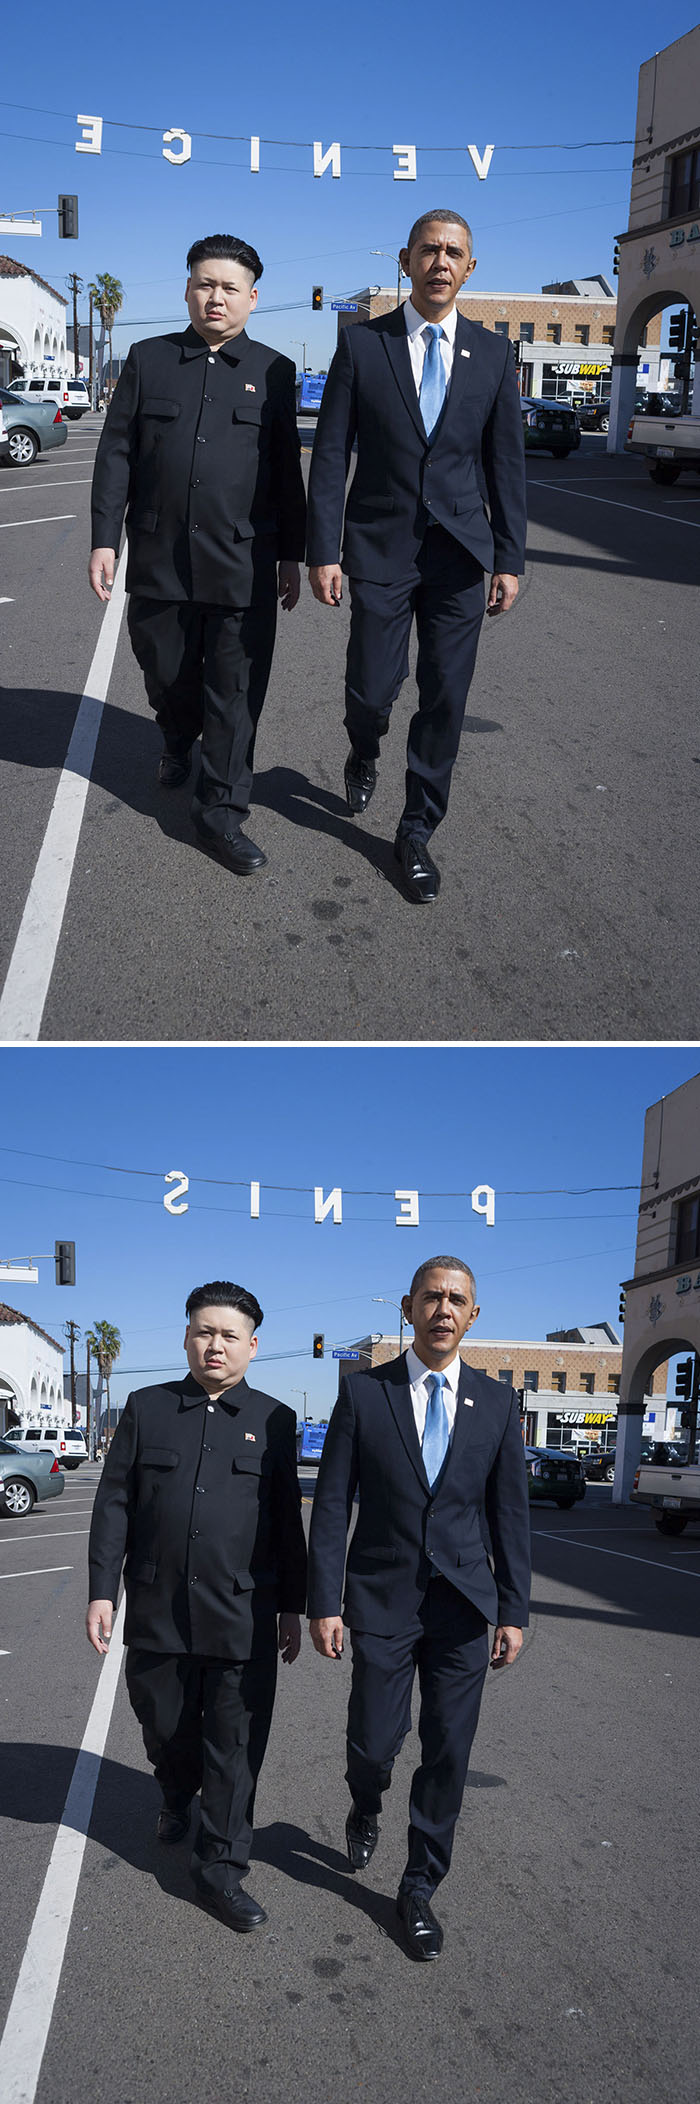 Kim Jong Un And Barack Obama Impersonators Taking On L.a